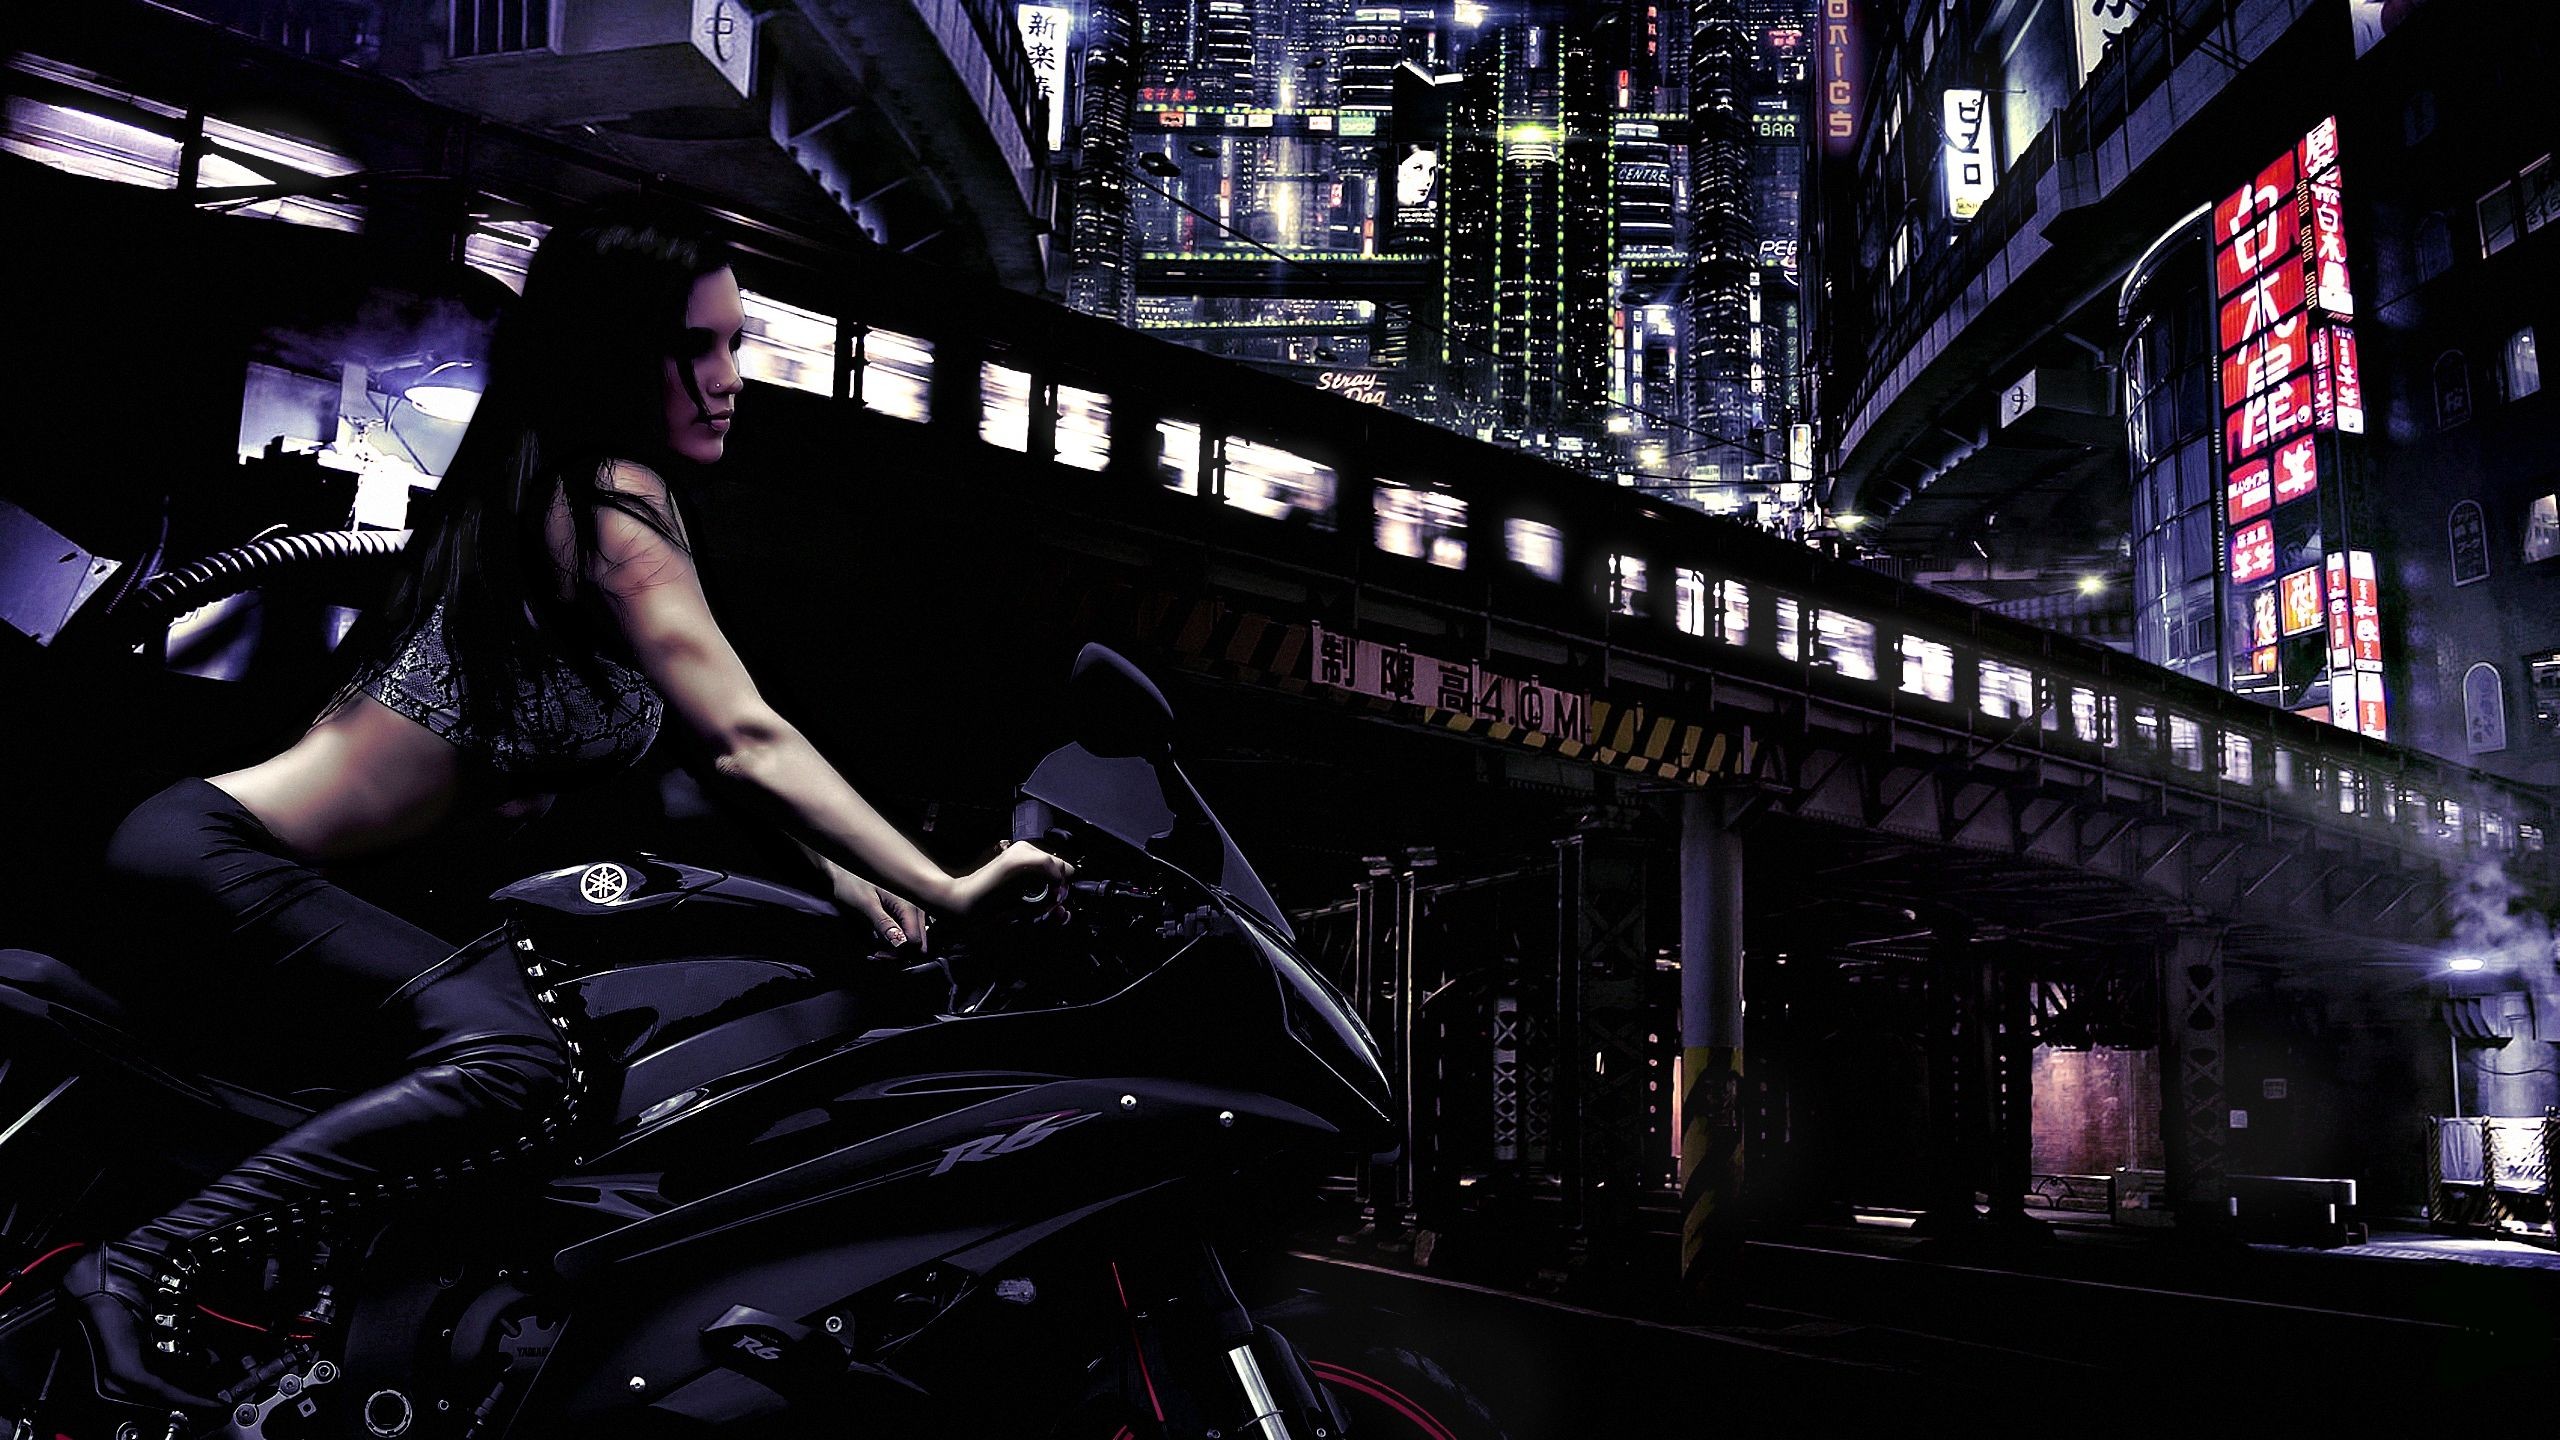 General 2560x1440 motorcycle women sitting cityscape dark vehicle dark hair long hair women with motorcycles digital art low light